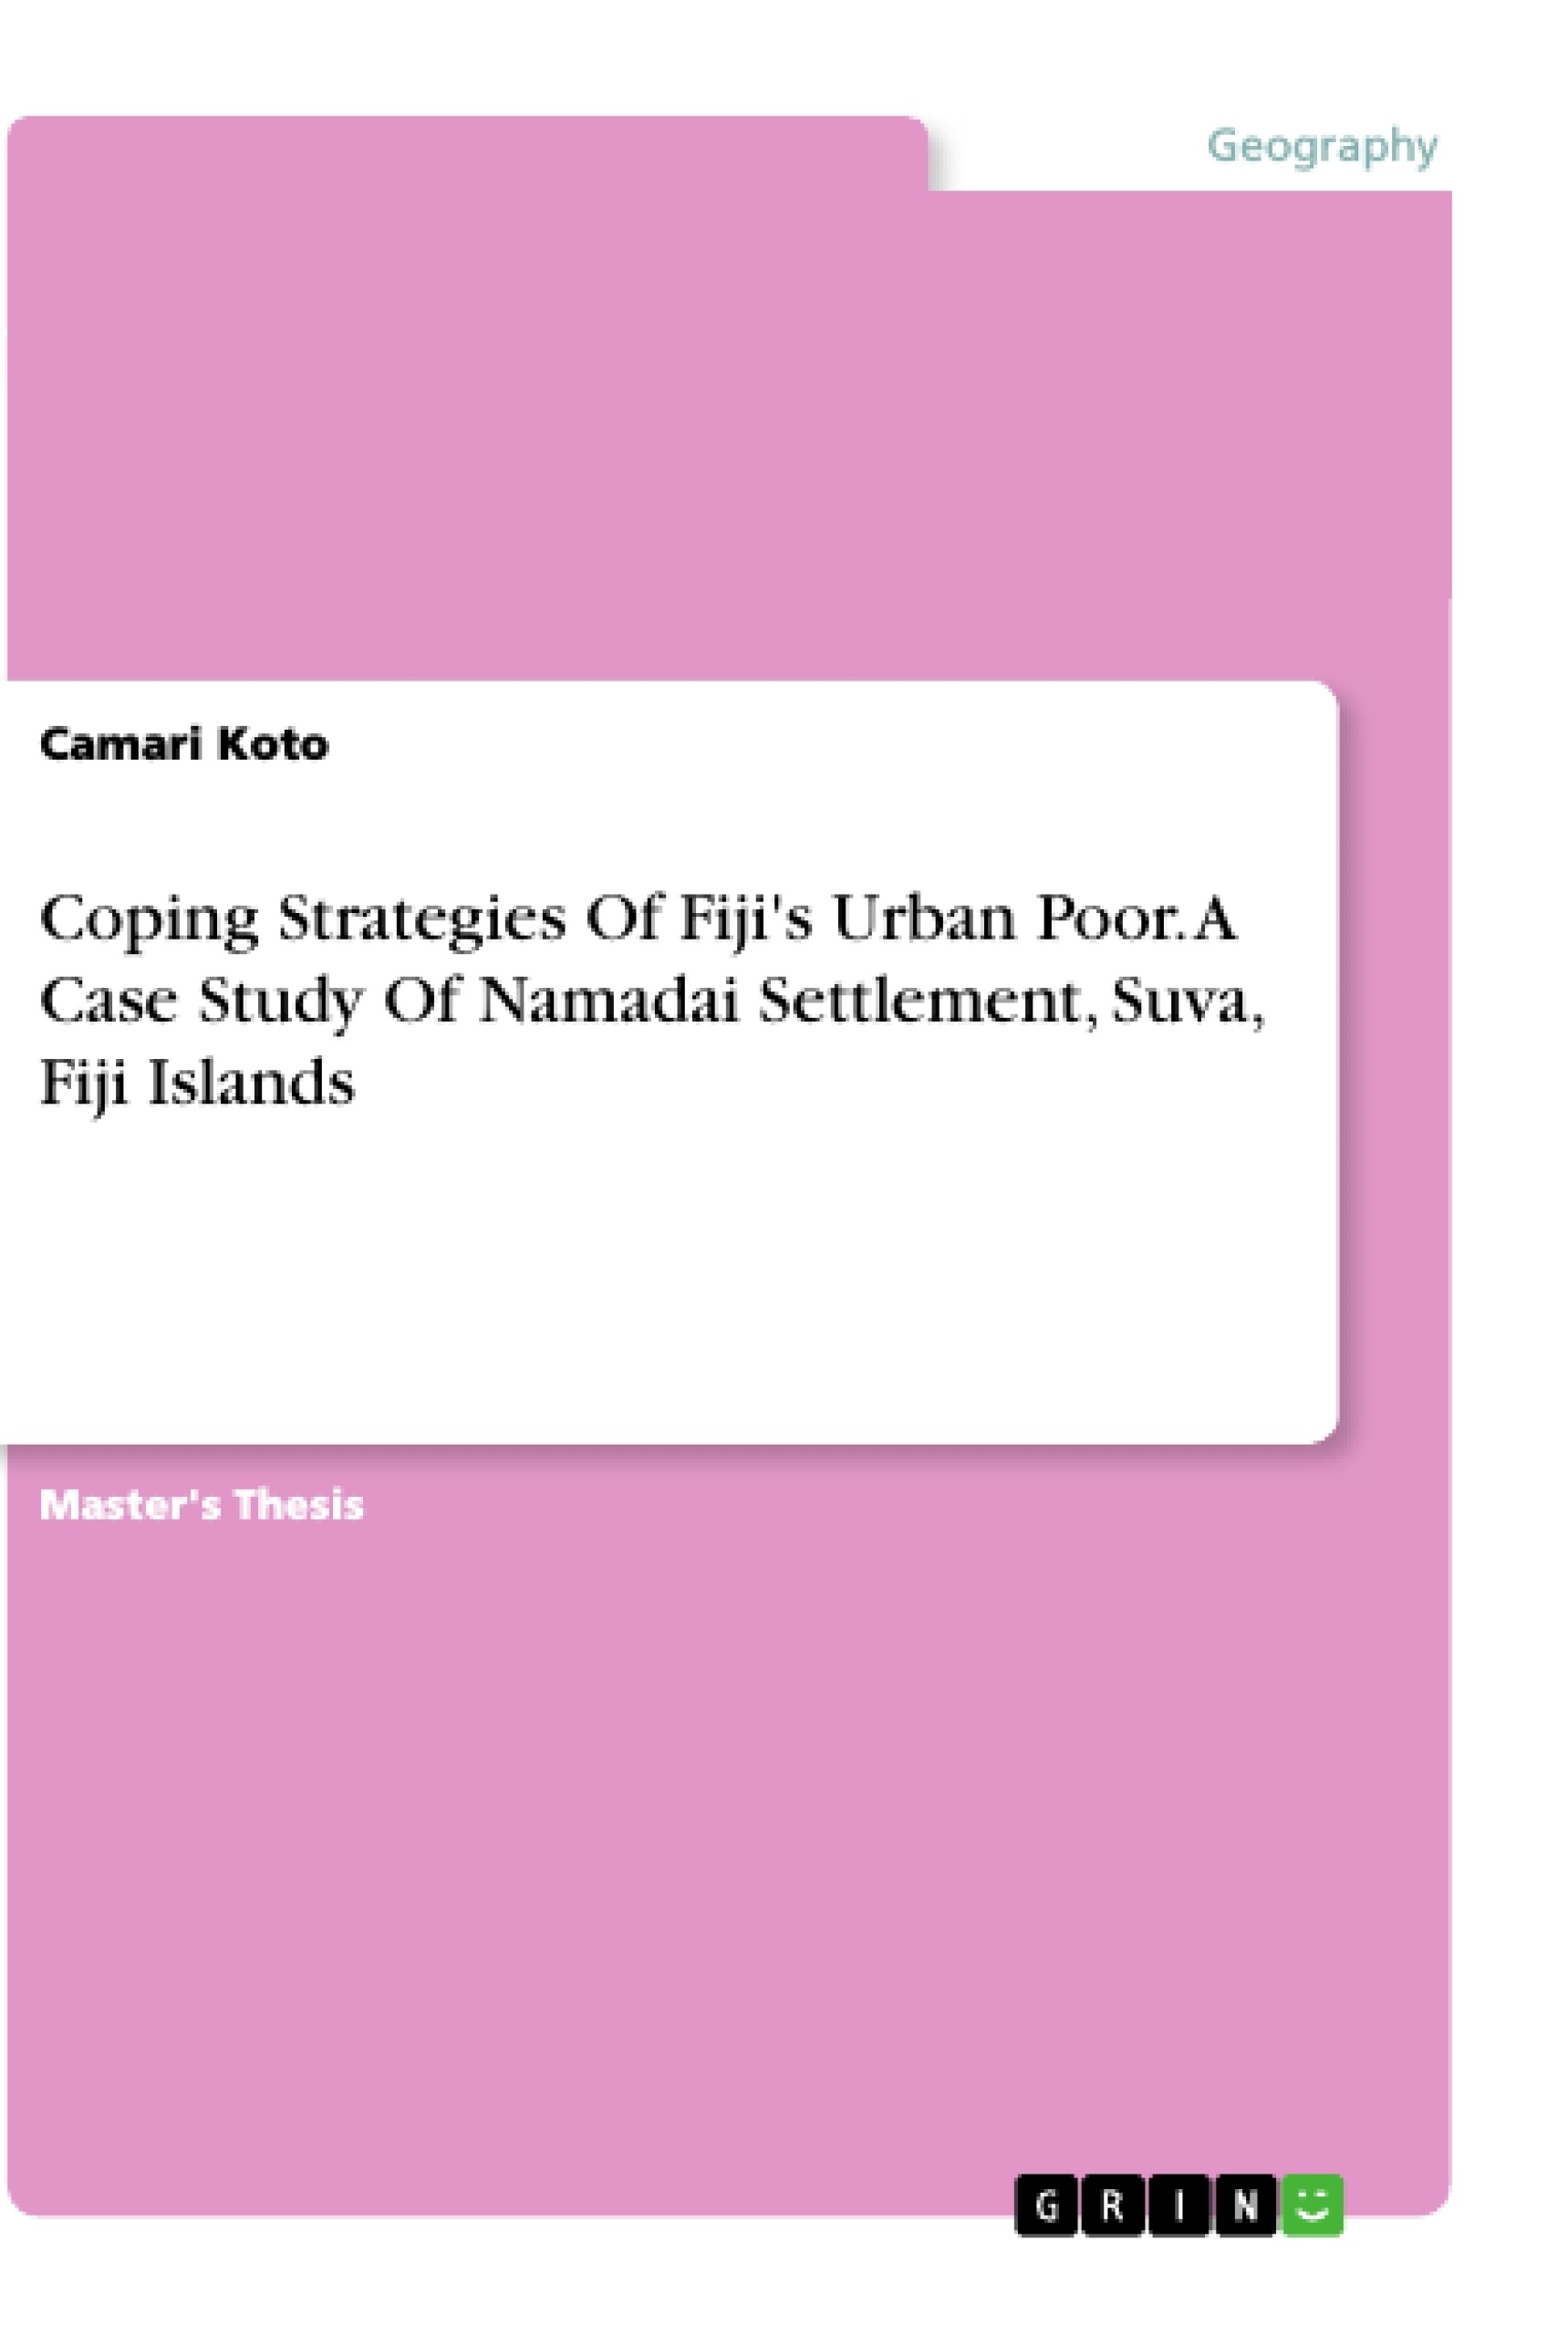 Title: Coping Strategies Of Fiji's Urban Poor. A Case Study Of Namadai Settlement, Suva, Fiji Islands